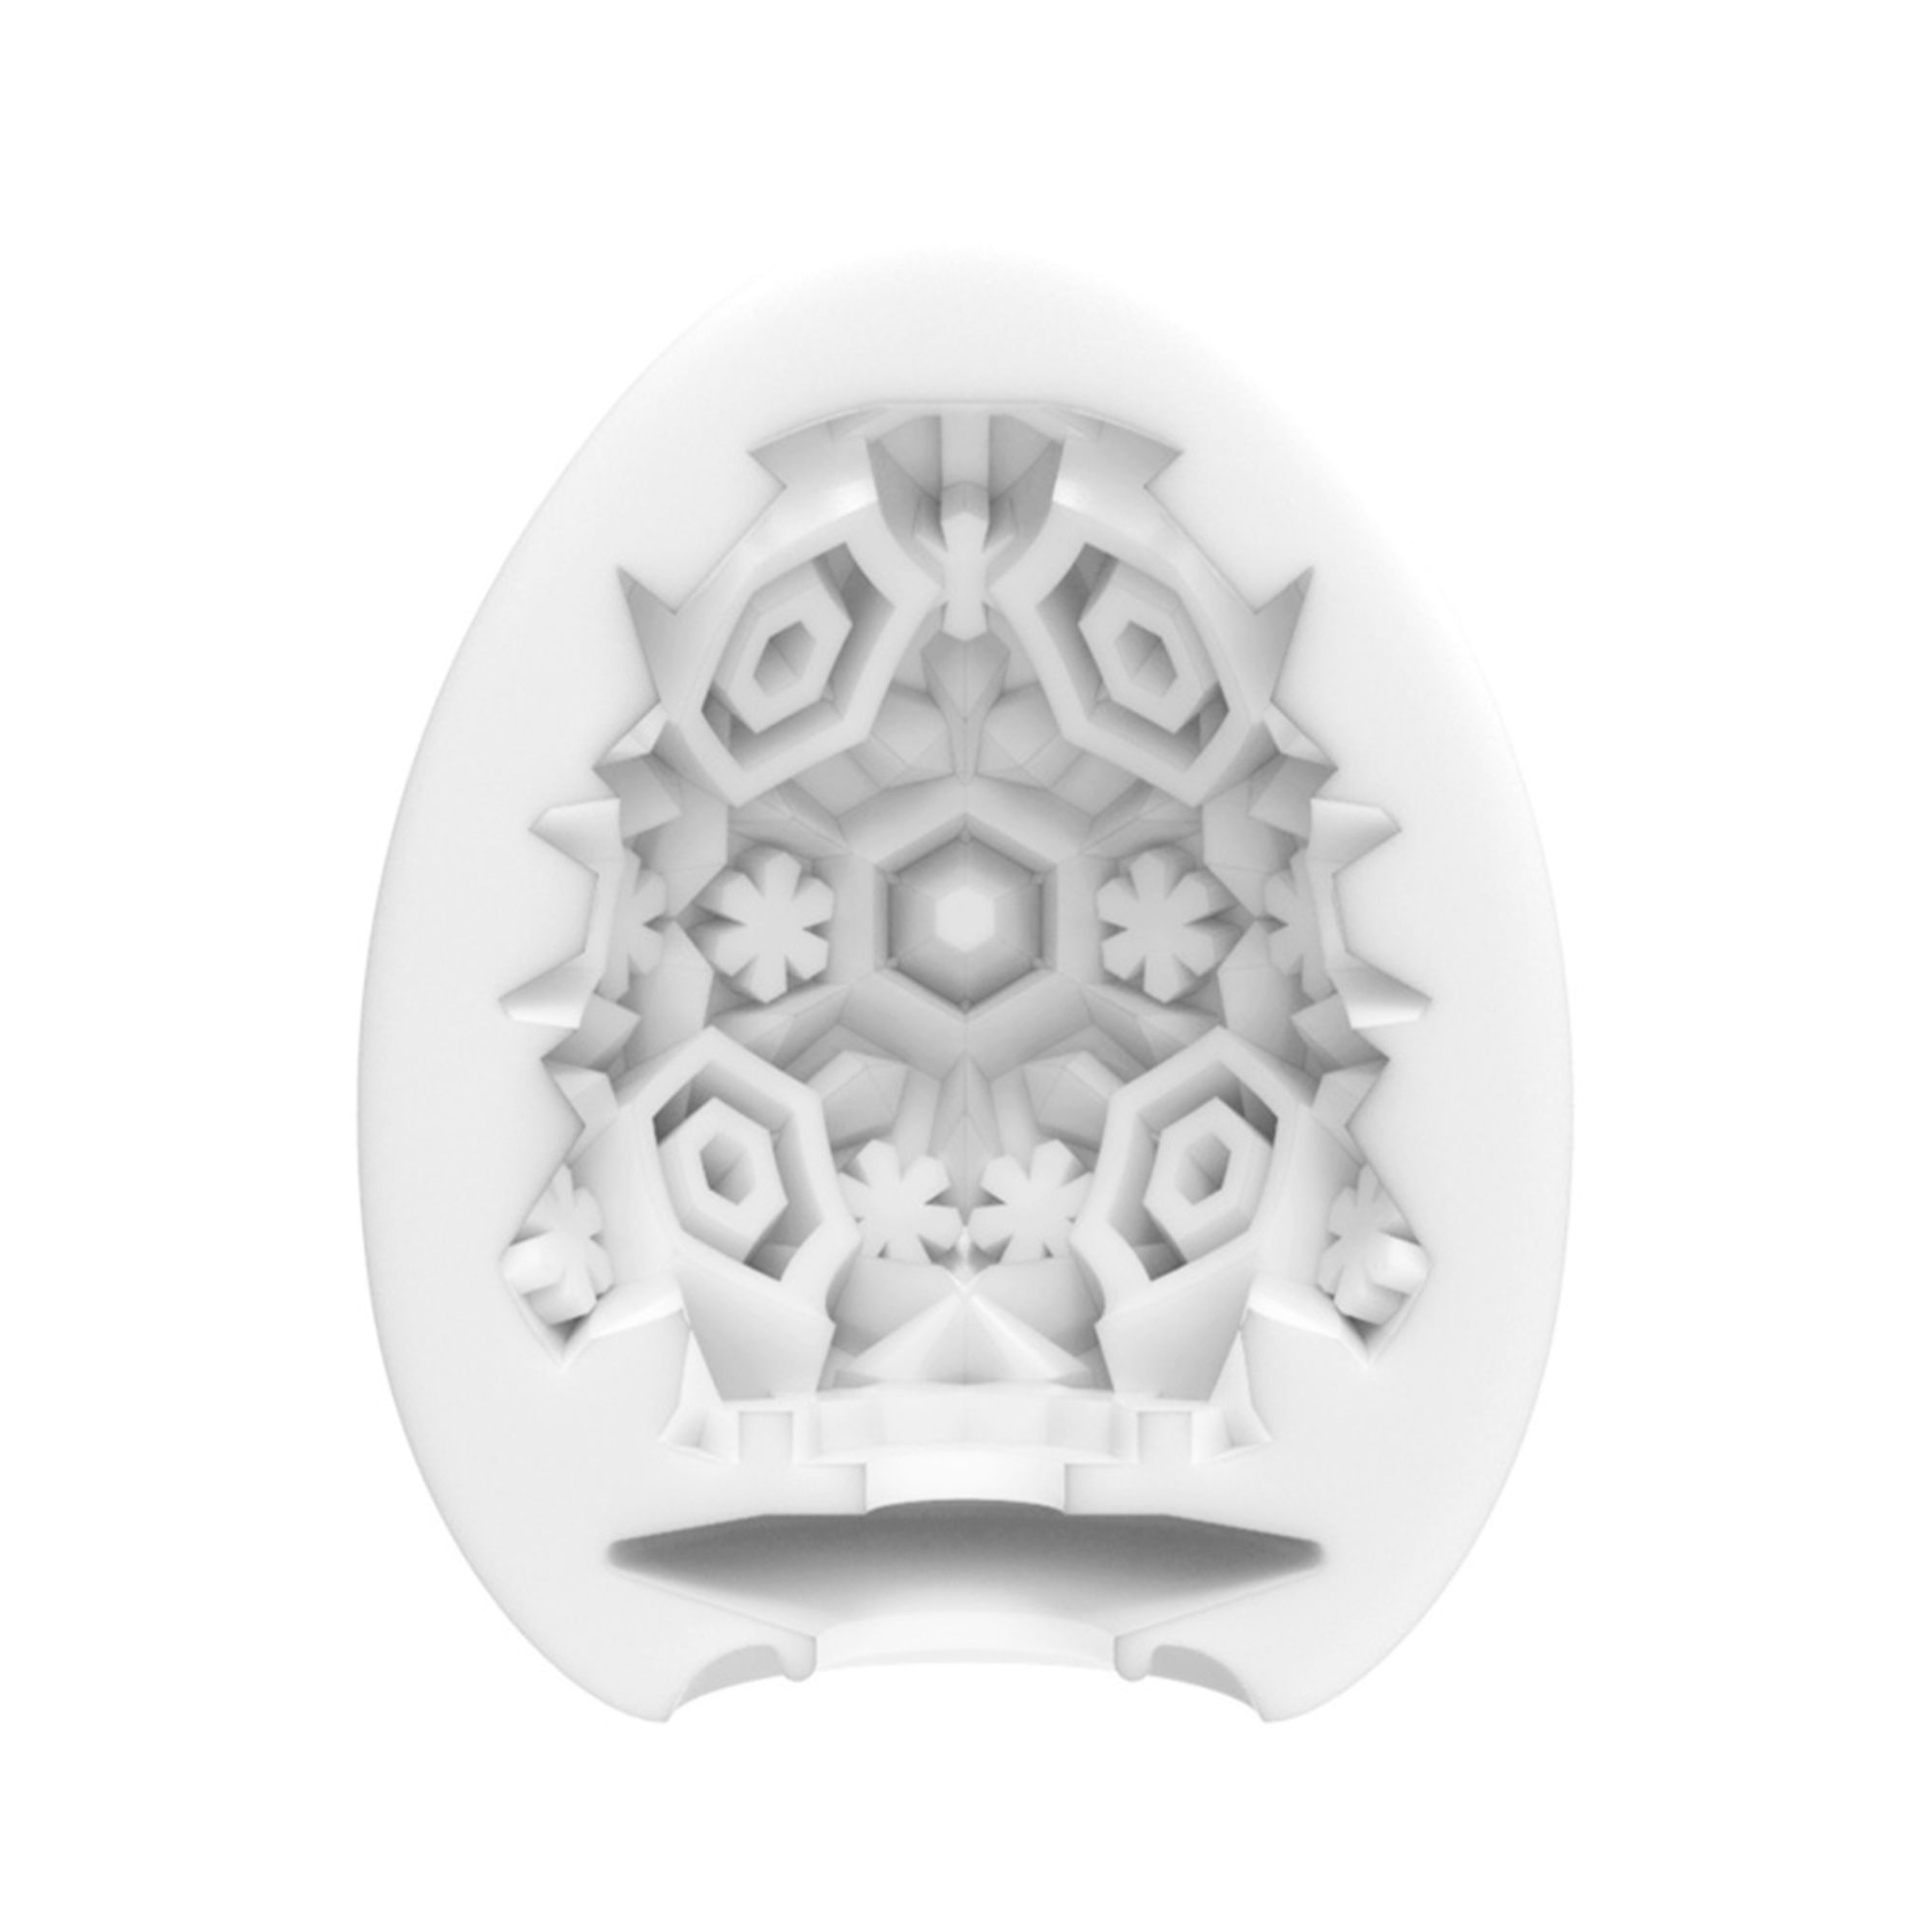 TENGA Egg Snow Crystal Masturbator